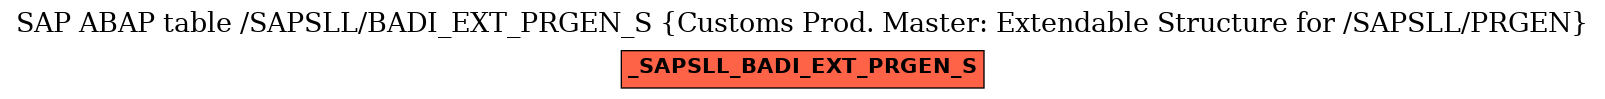 E-R Diagram for table /SAPSLL/BADI_EXT_PRGEN_S (Customs Prod. Master: Extendable Structure for /SAPSLL/PRGEN)